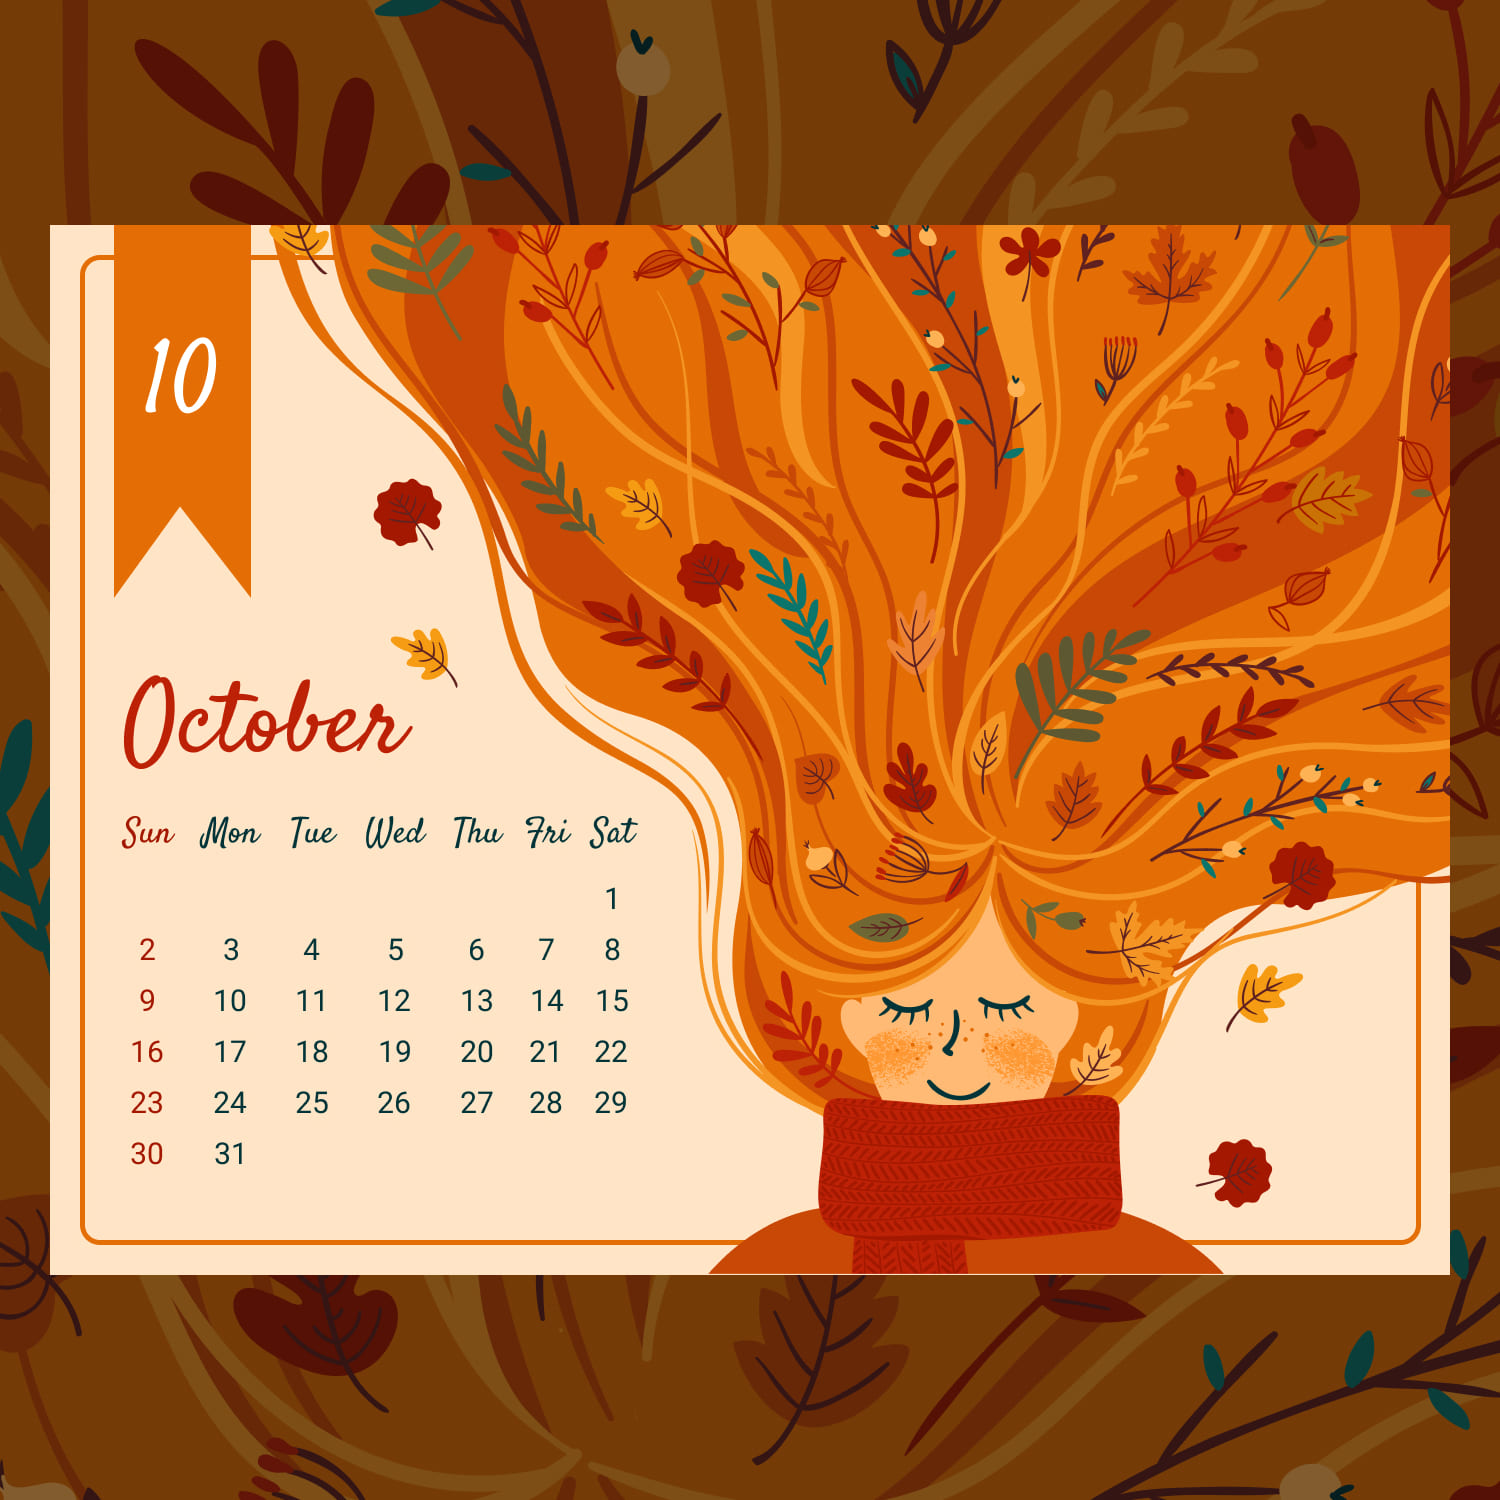 Free Calendar October cover image.